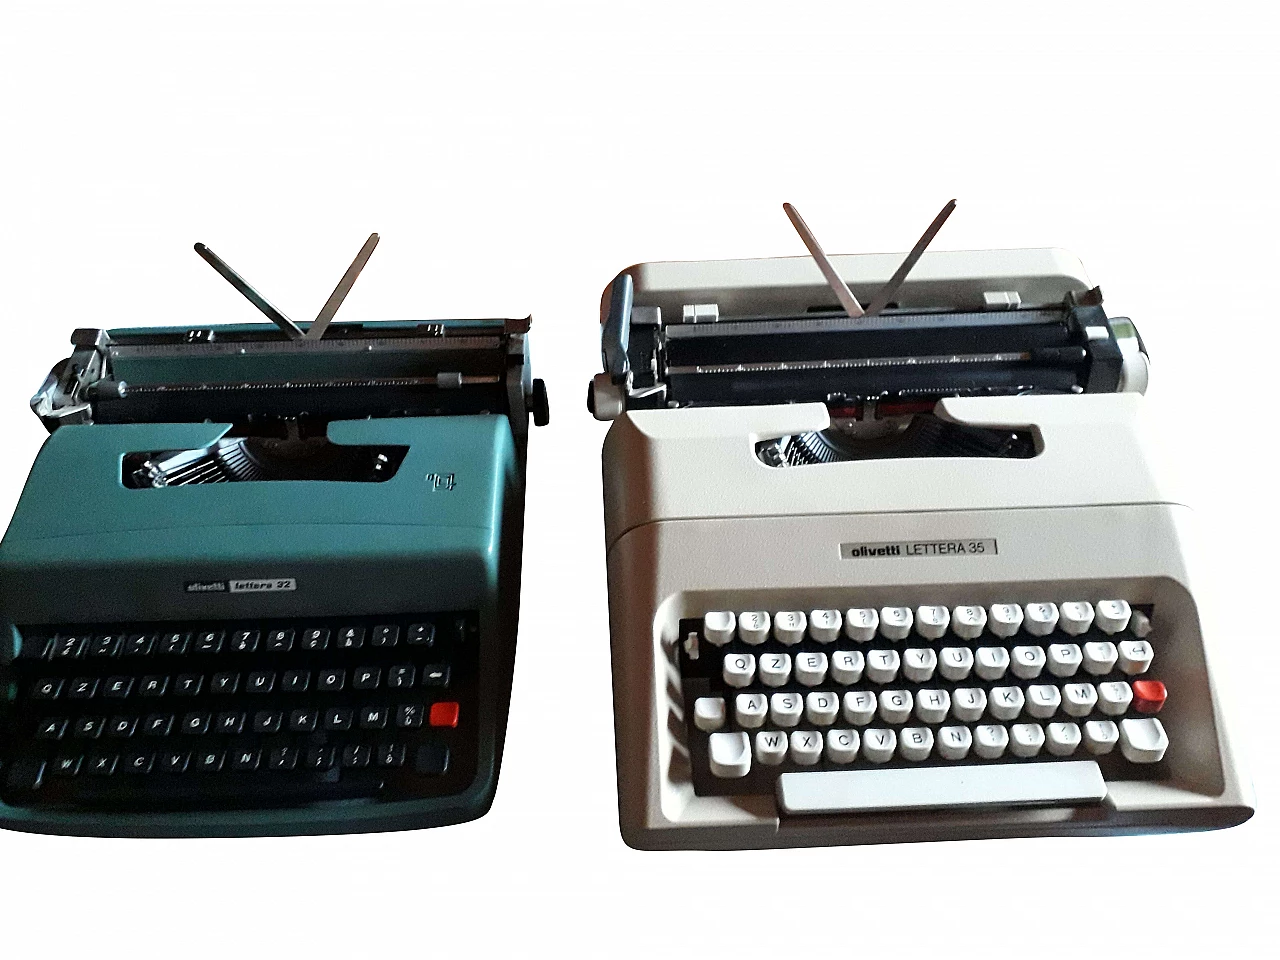 Pair of typewriters Olivetti 32 and Olivetti 35 1144597